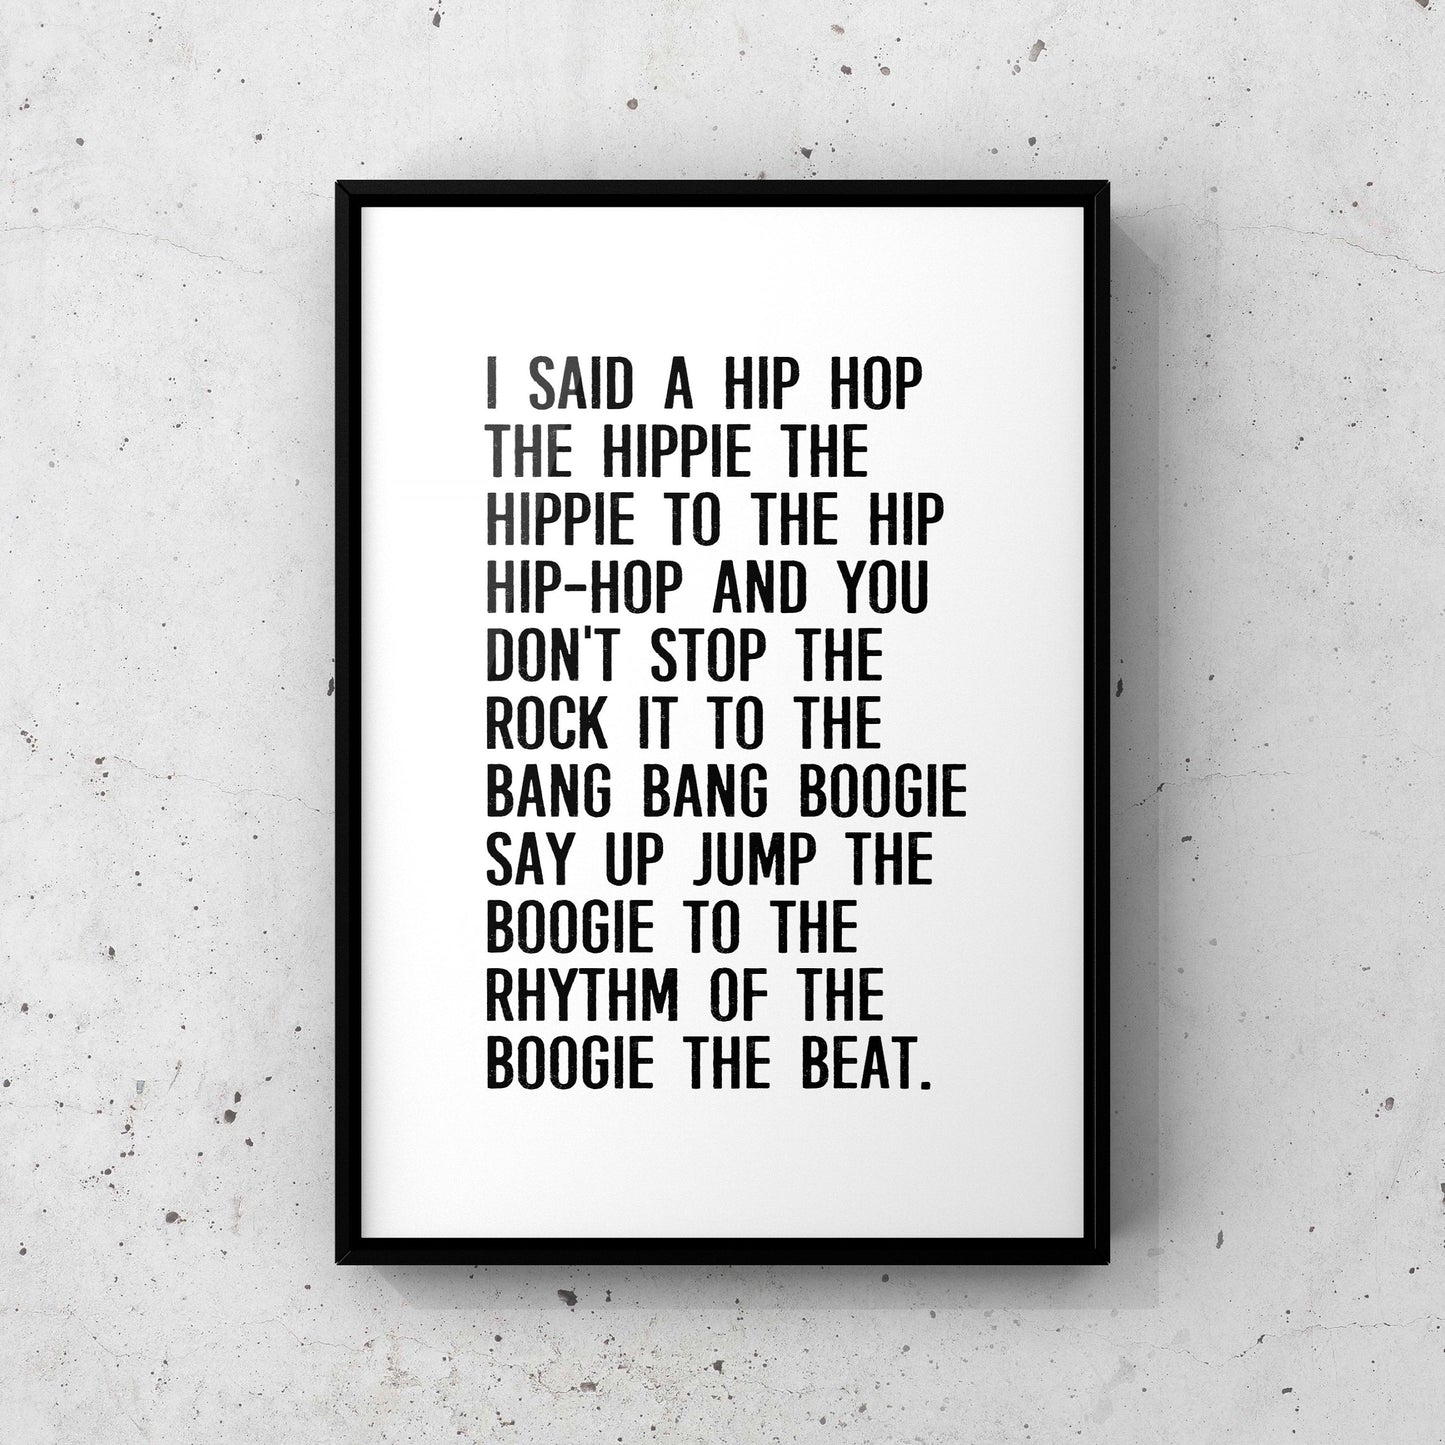 I said a hip hop